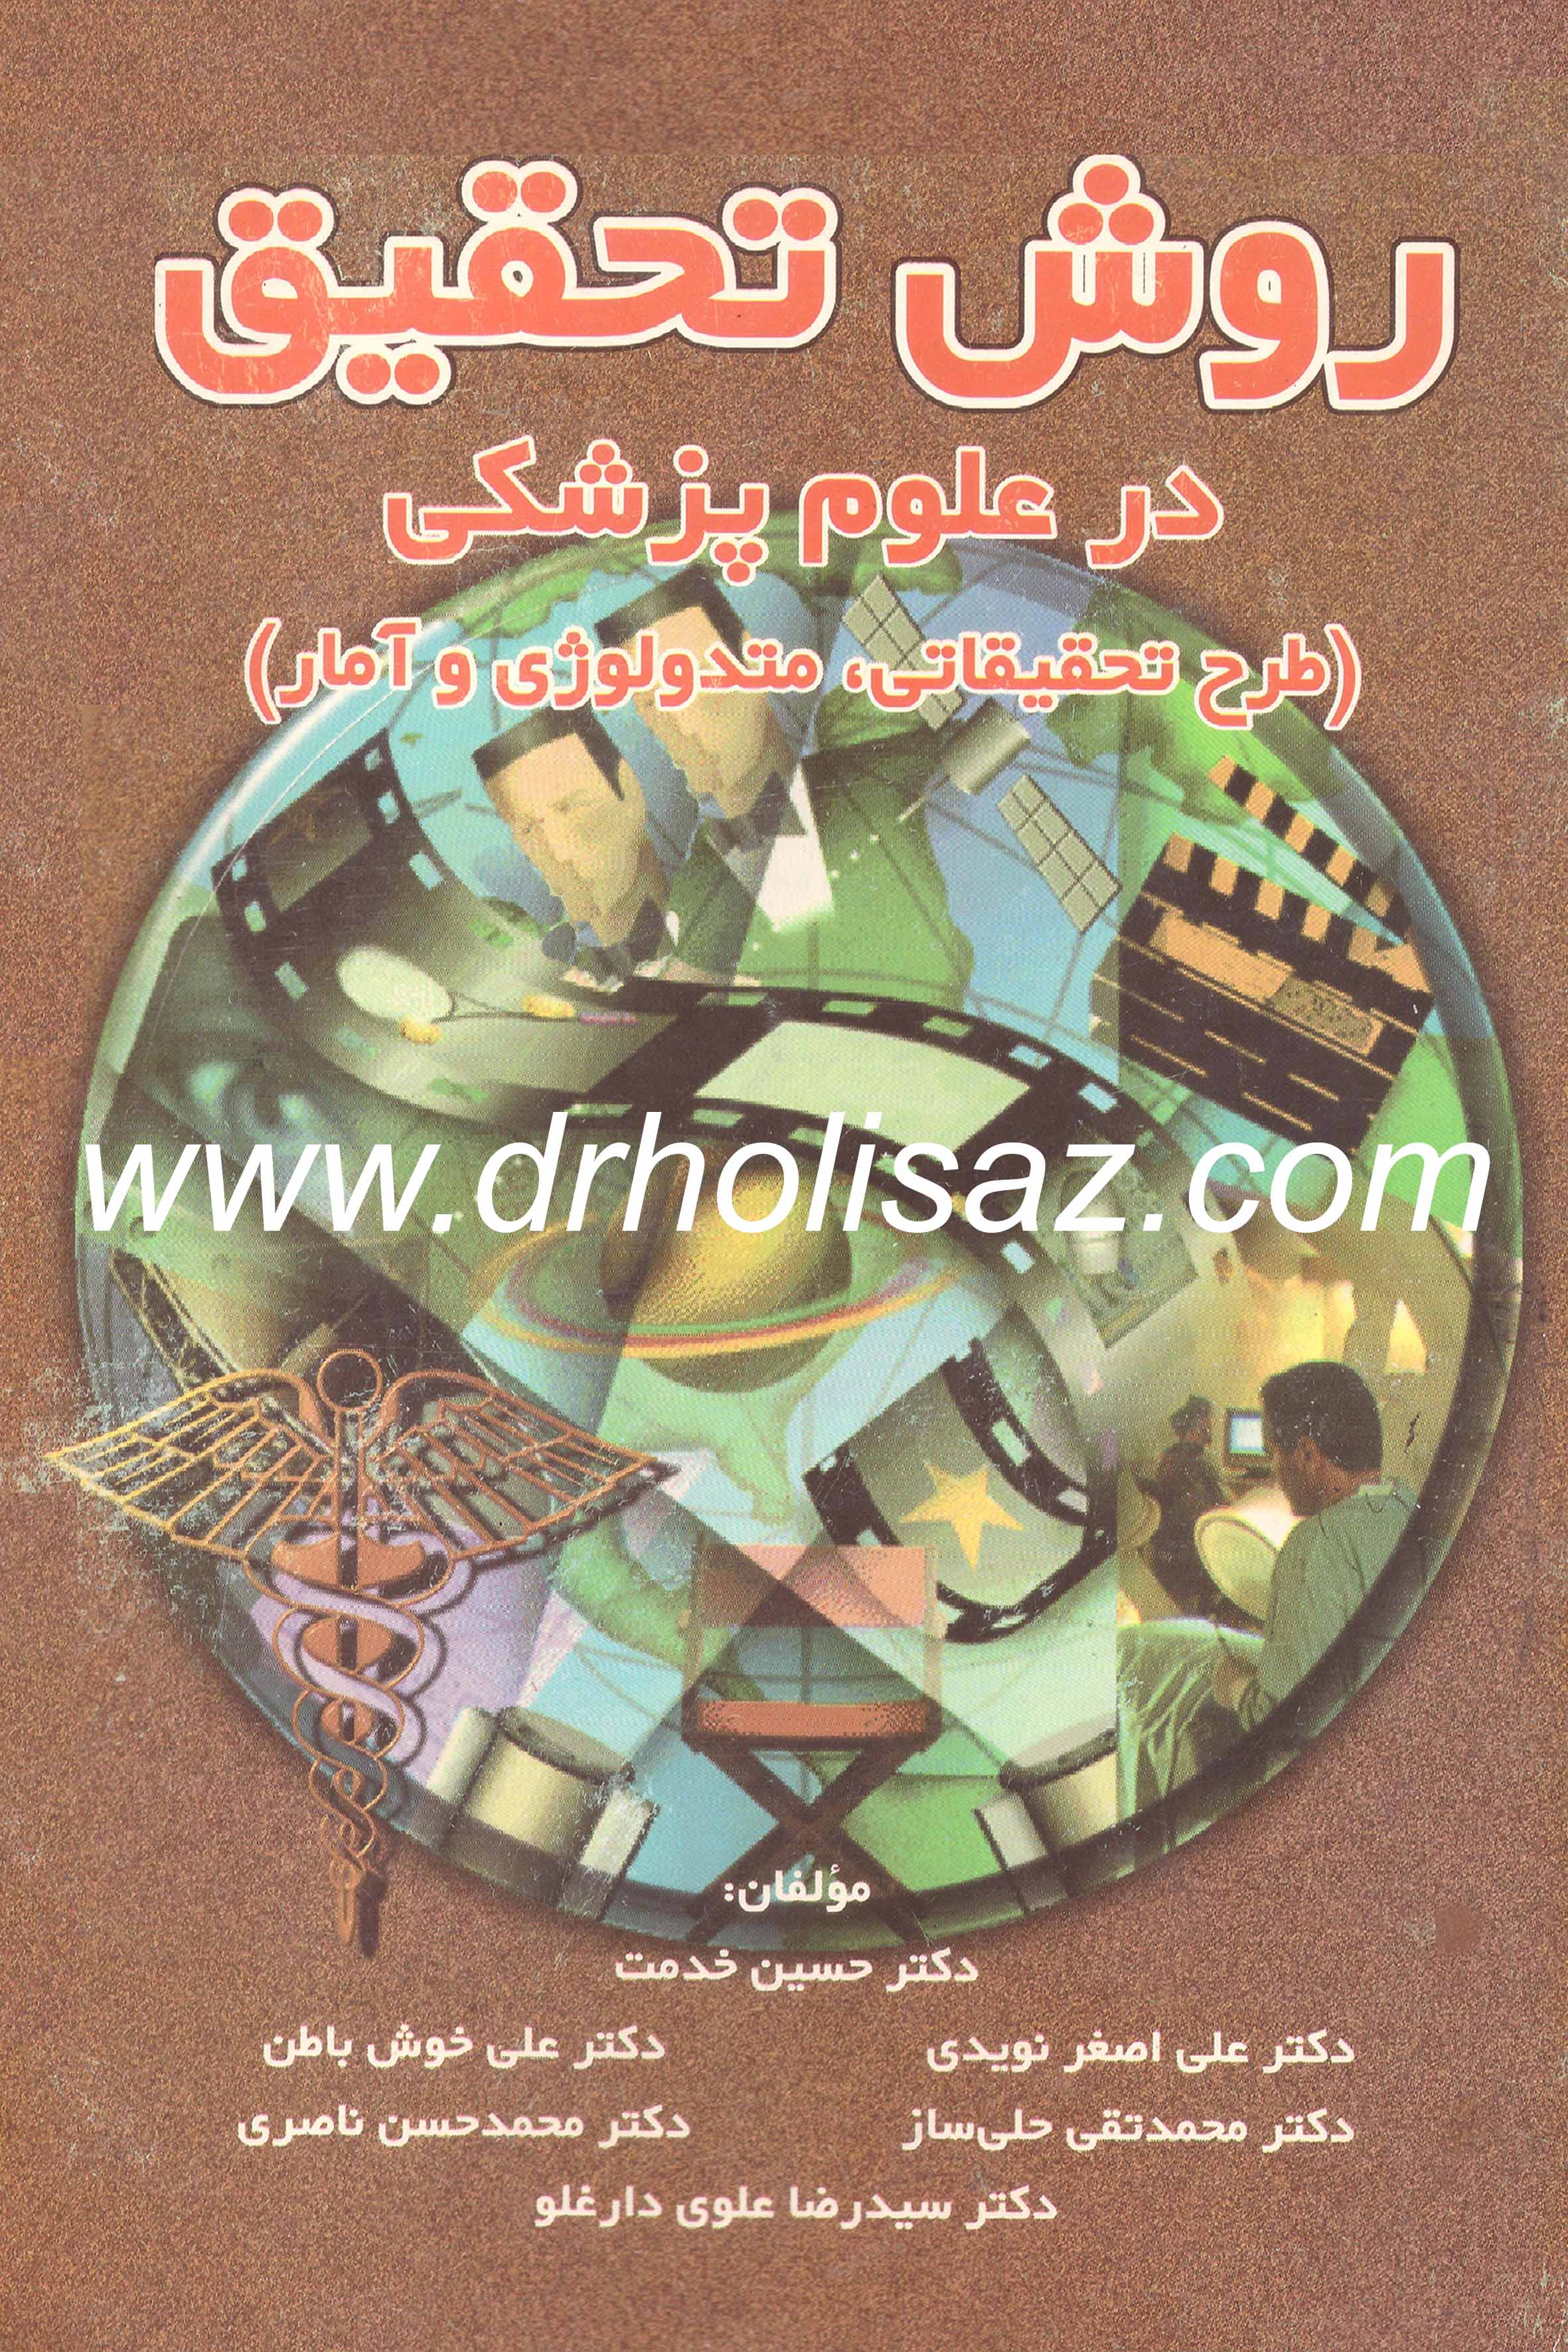 www.drholisaz.com-ravesh